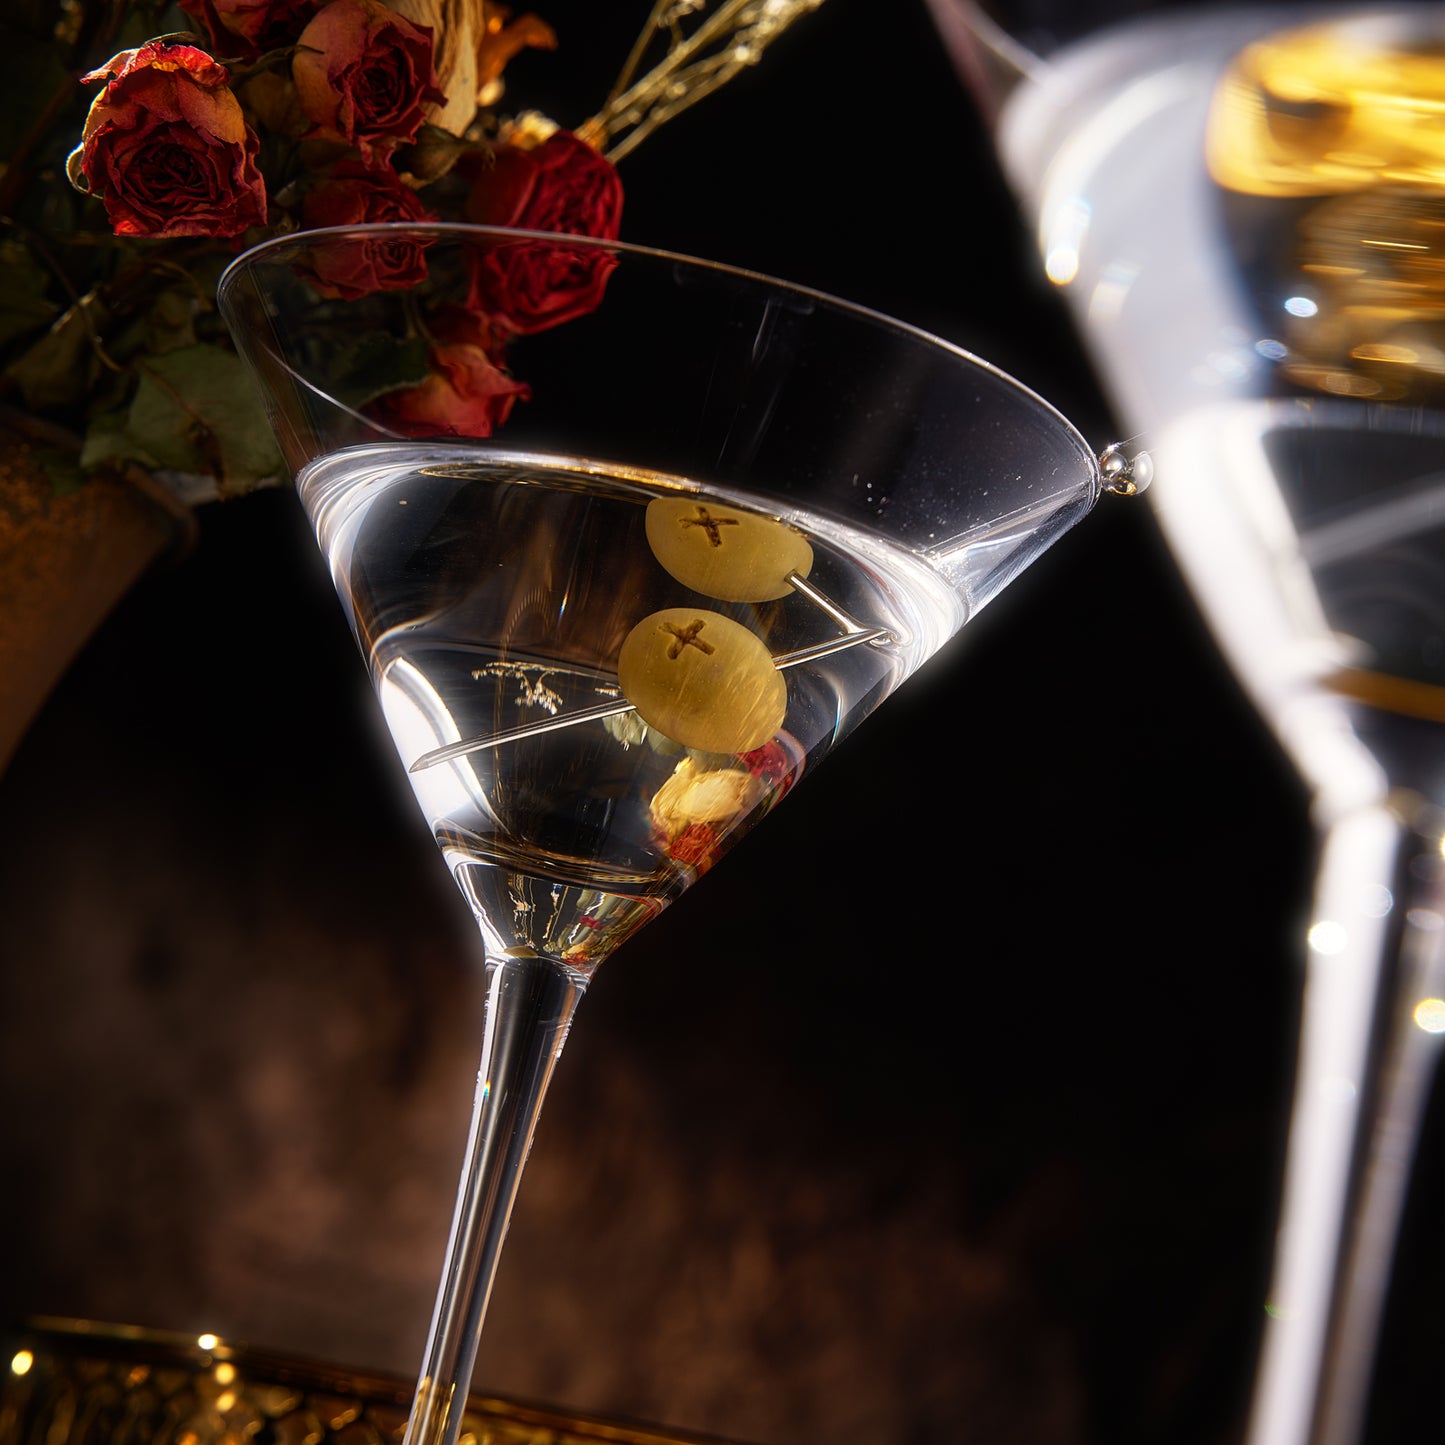 Spritz Martini Glassware, Set of 2